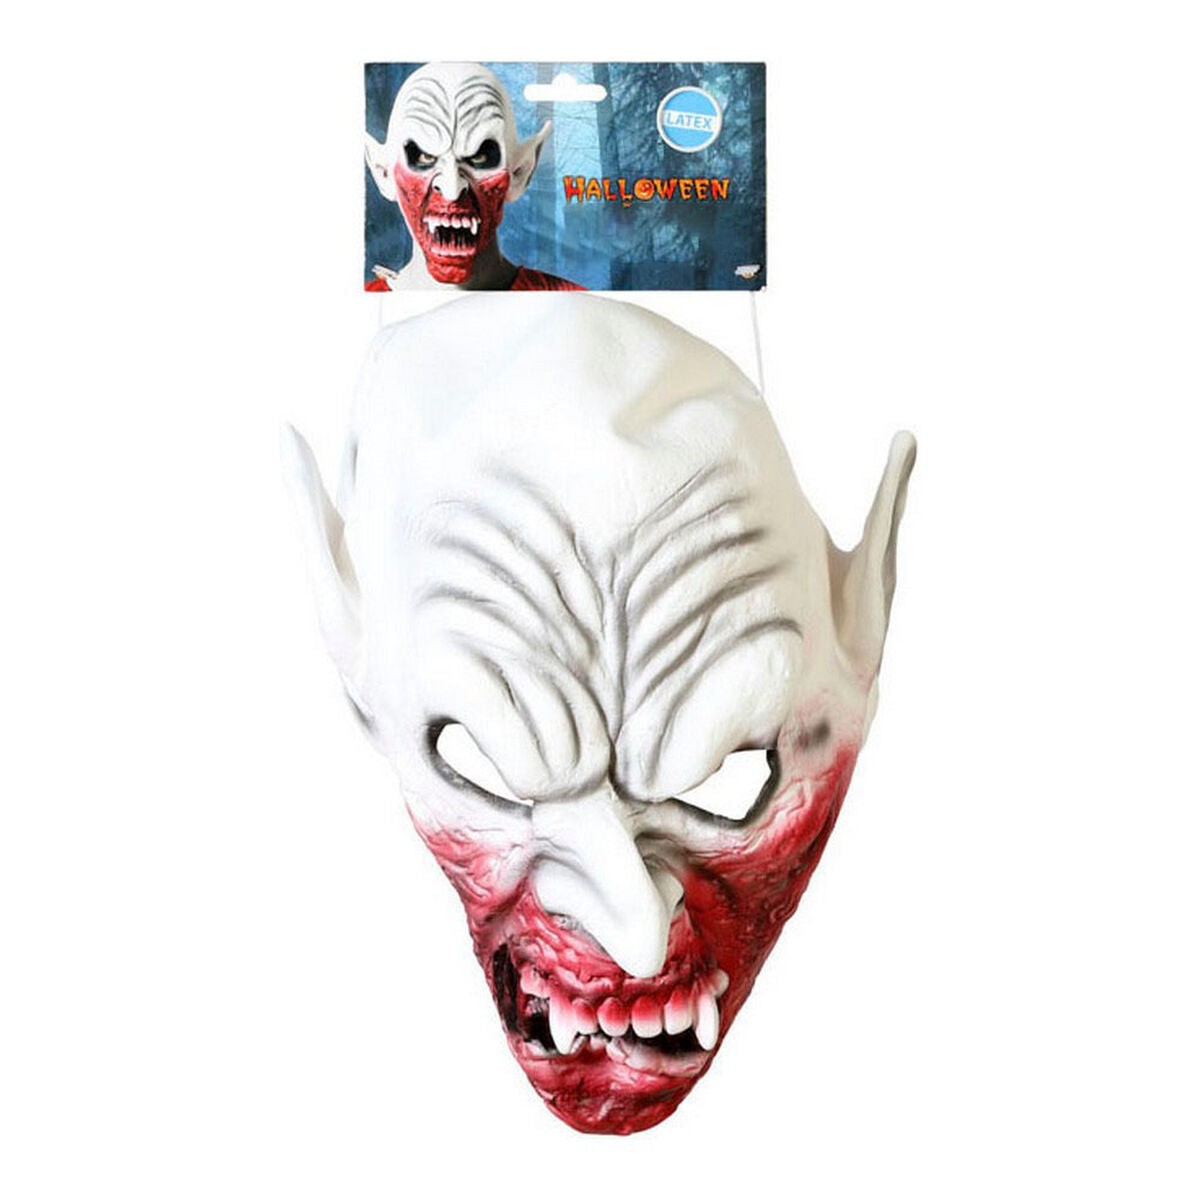 Masque Halloween Monstre Blanc